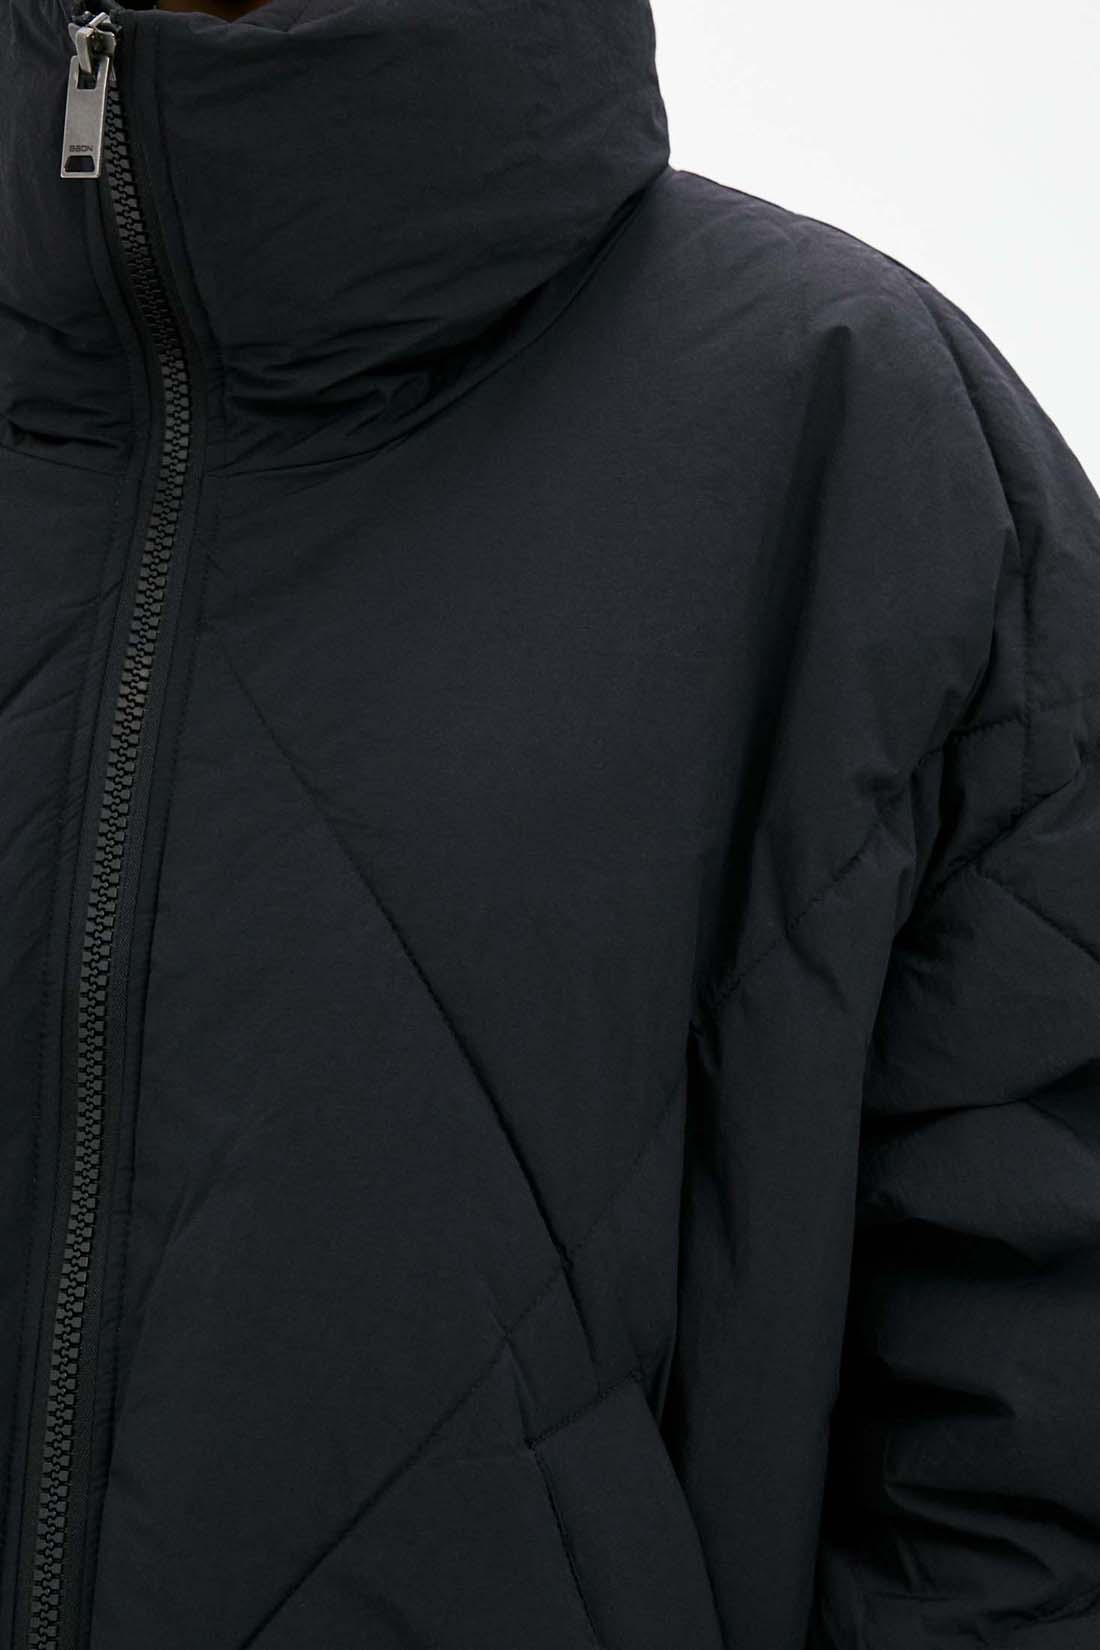 Куртка (Эко пух) (арт. baon B041518), размер S, цвет черный Куртка (Эко пух) (арт. baon B041518) - фото 3